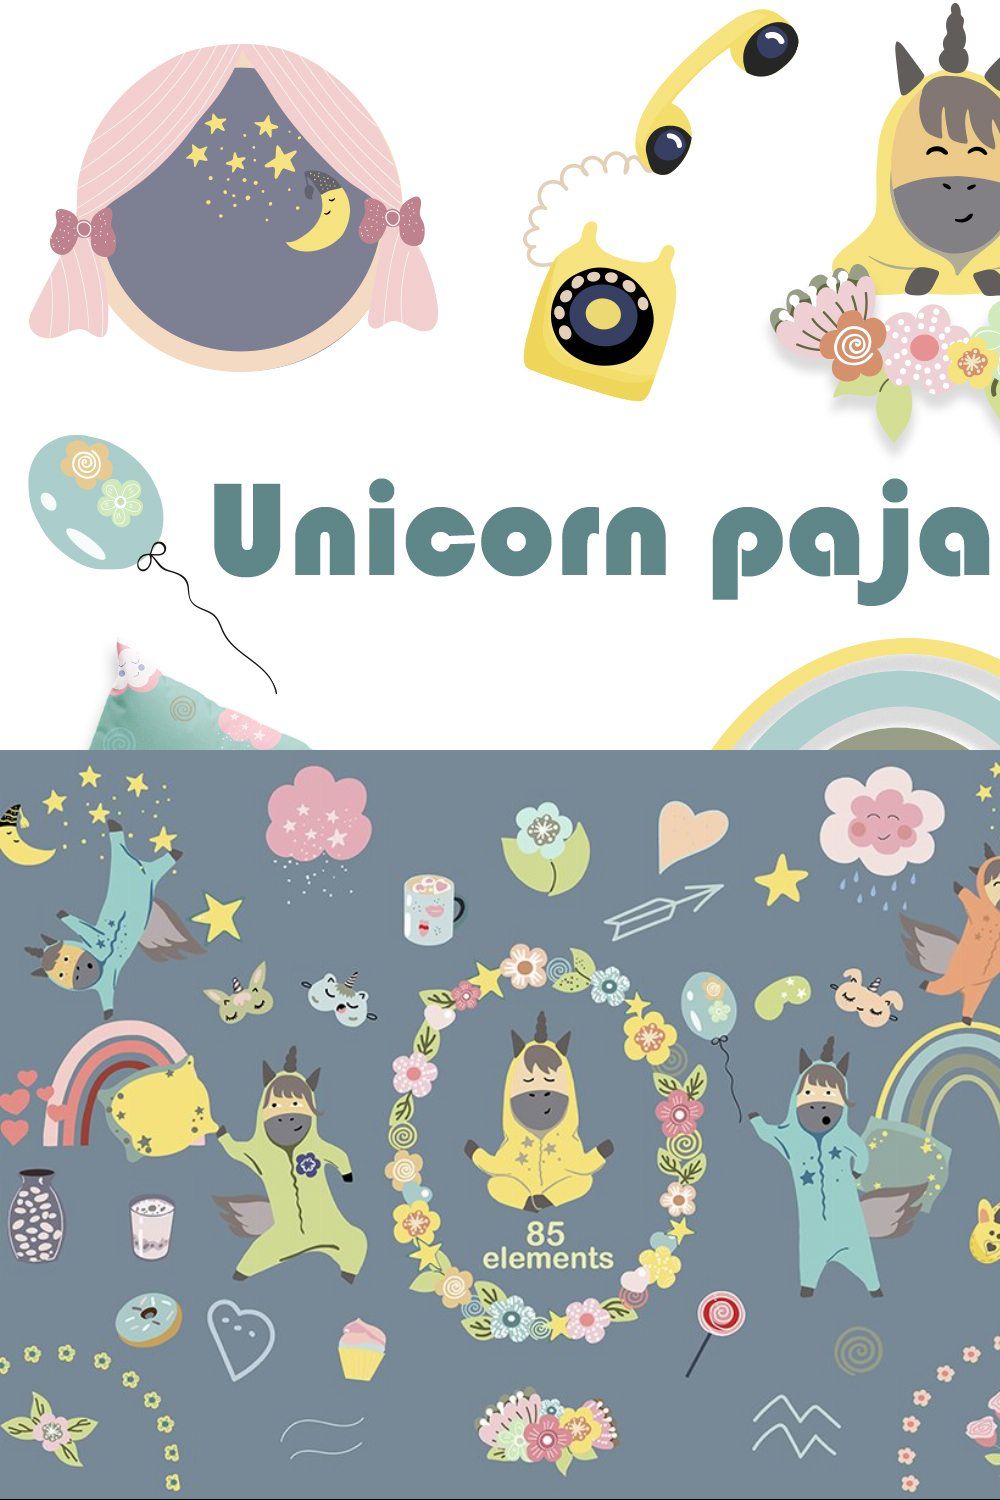 Unicorn pajama party clipart pinterest preview image.